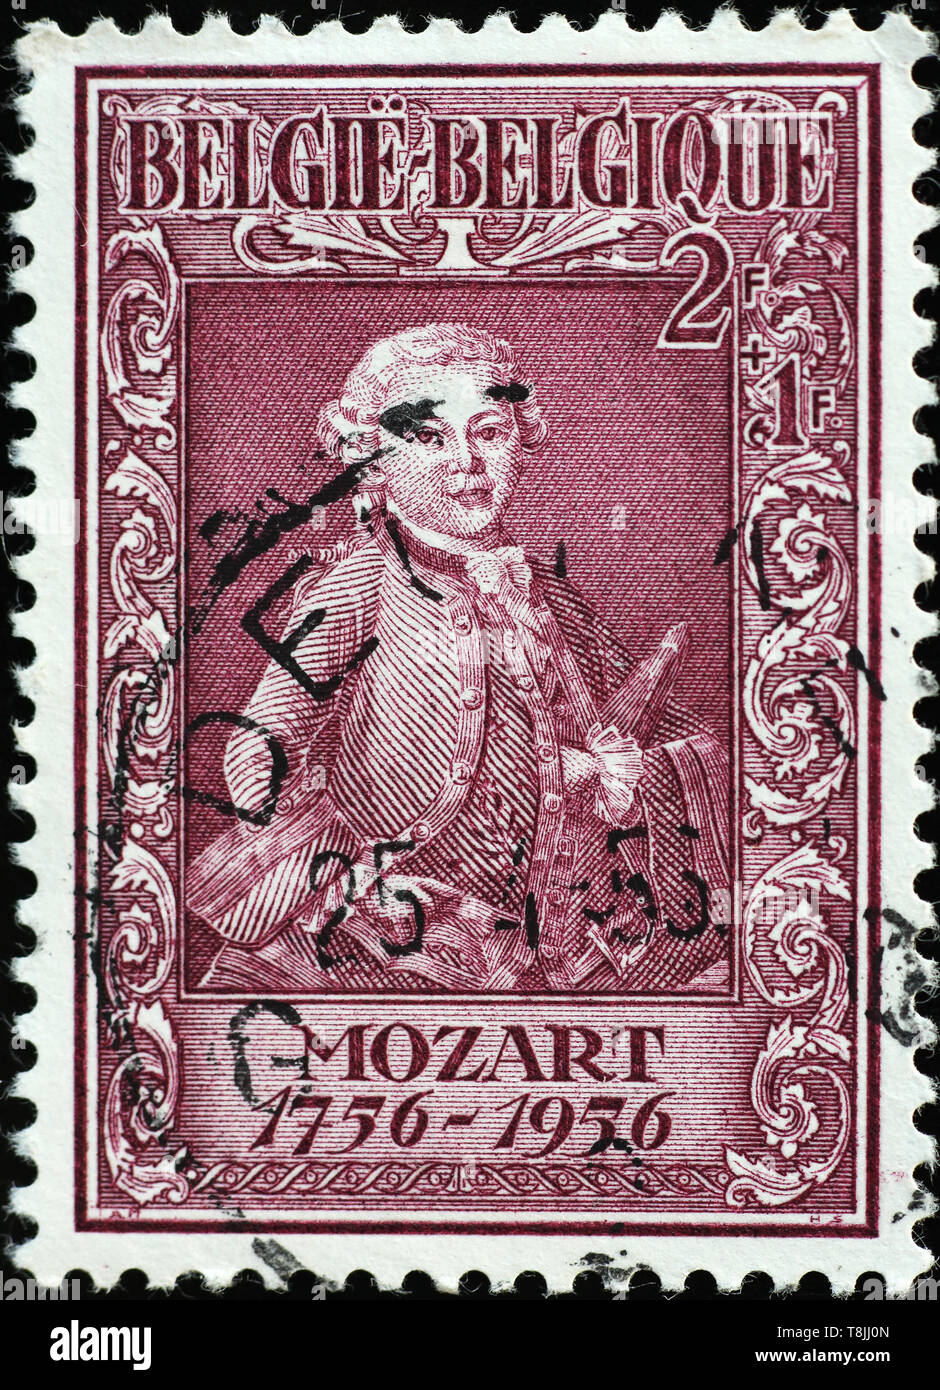 Portrait of Mozart on vintage postage stamp Stock Photo